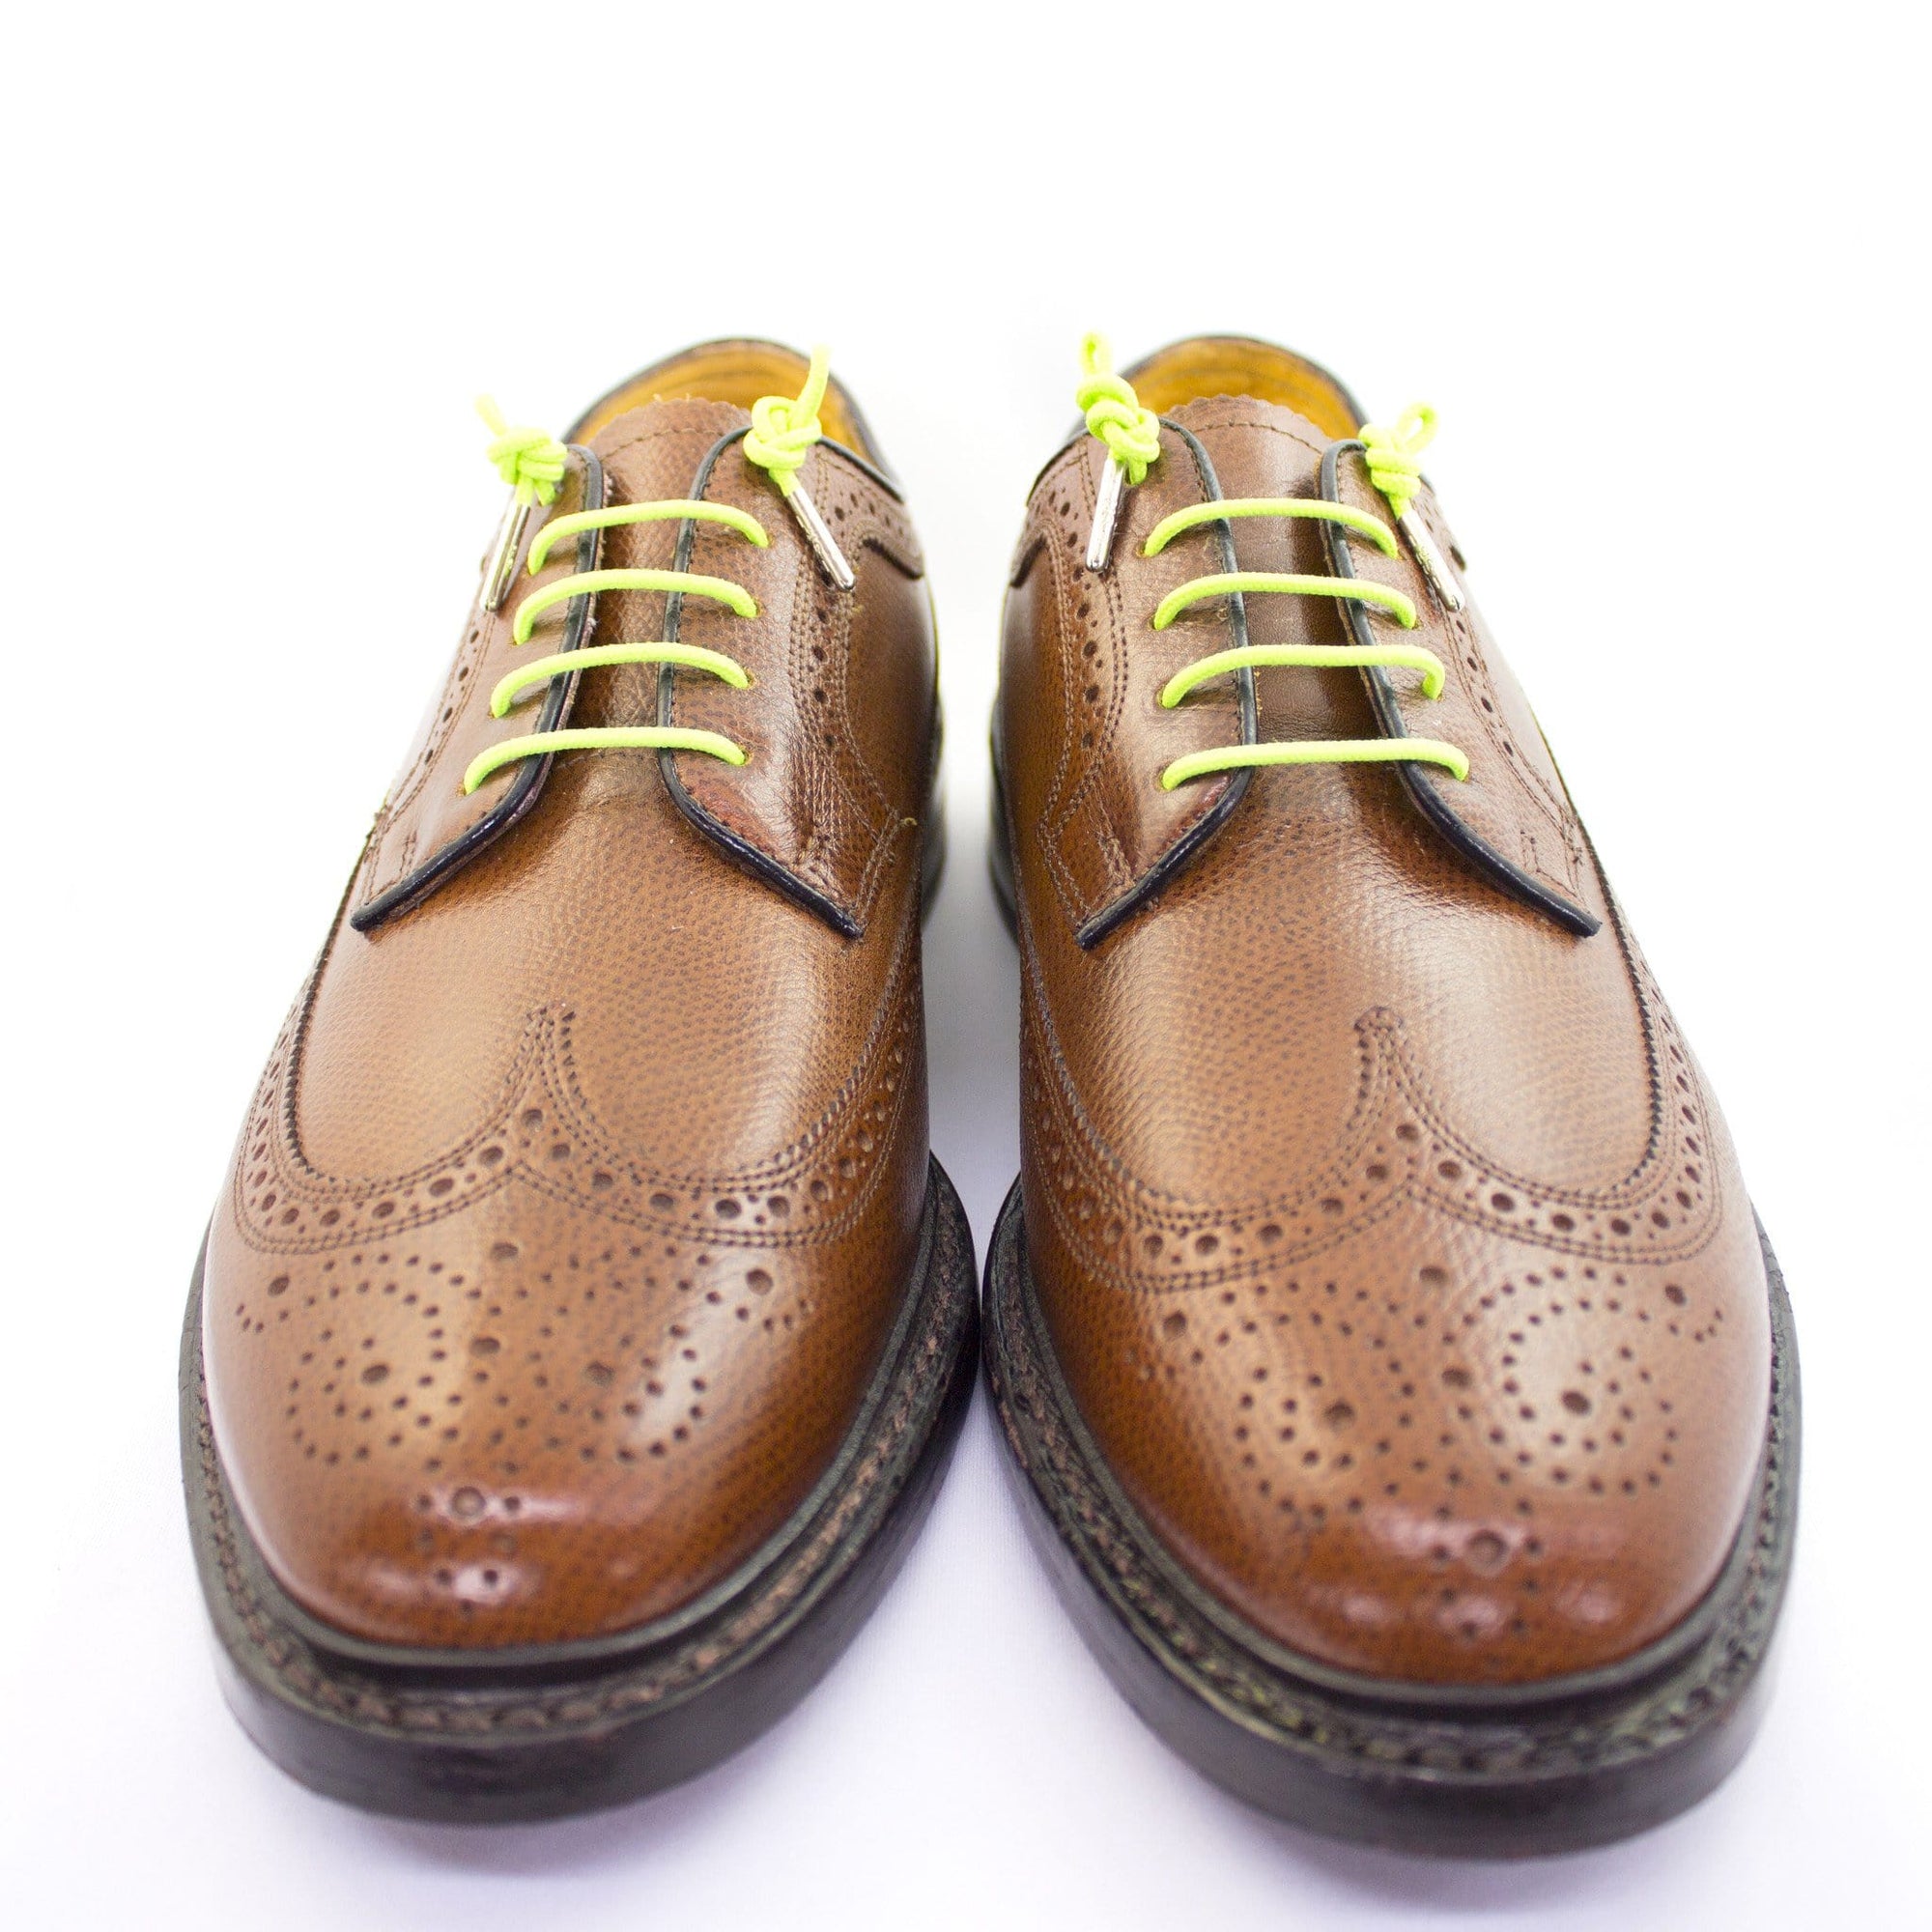 Neon green laces for dress shoes, Length: 27"/69cm-Stolen Riches